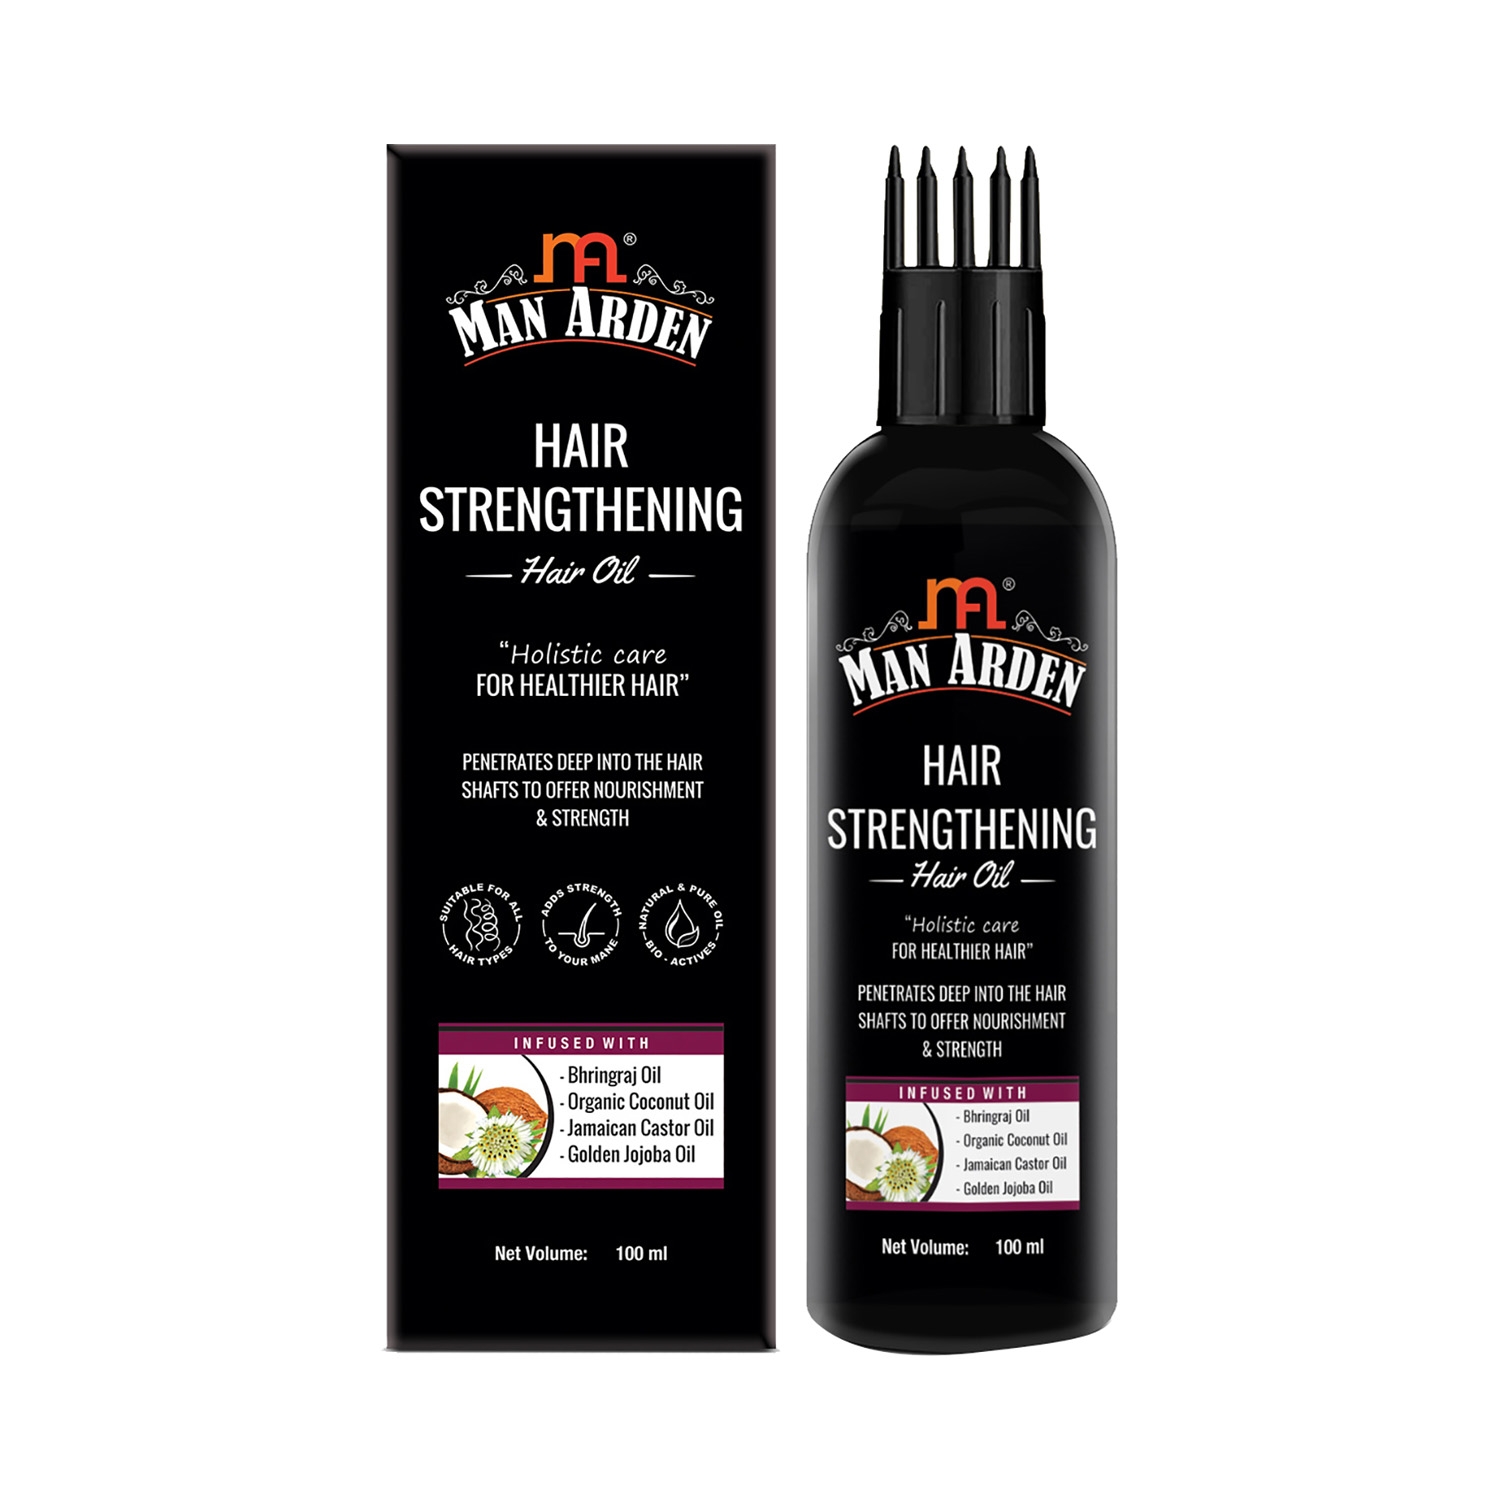 Man Arden | Man Arden Hair Strengthening Hair Oil With Comb Applicator For Nourishment & Strength (100ml)